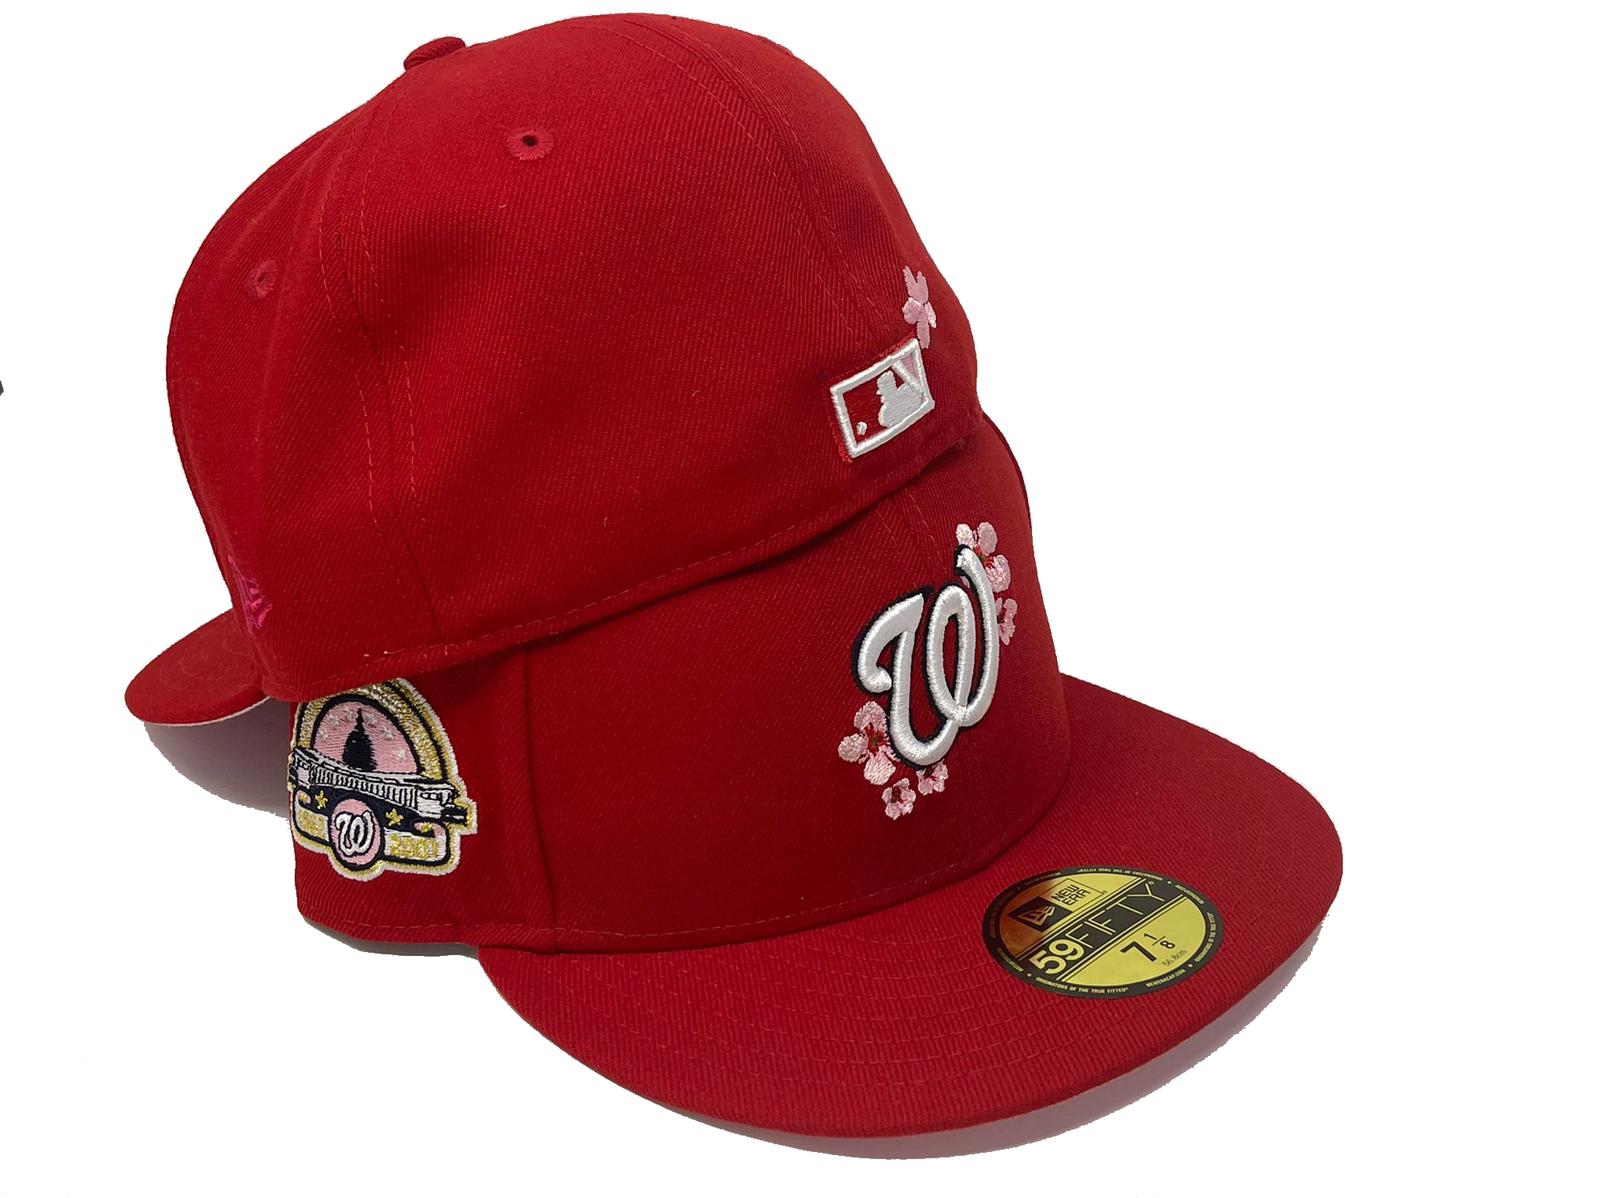 Washington Nationals introduce new jersey, hats for 2017 - Federal Baseball